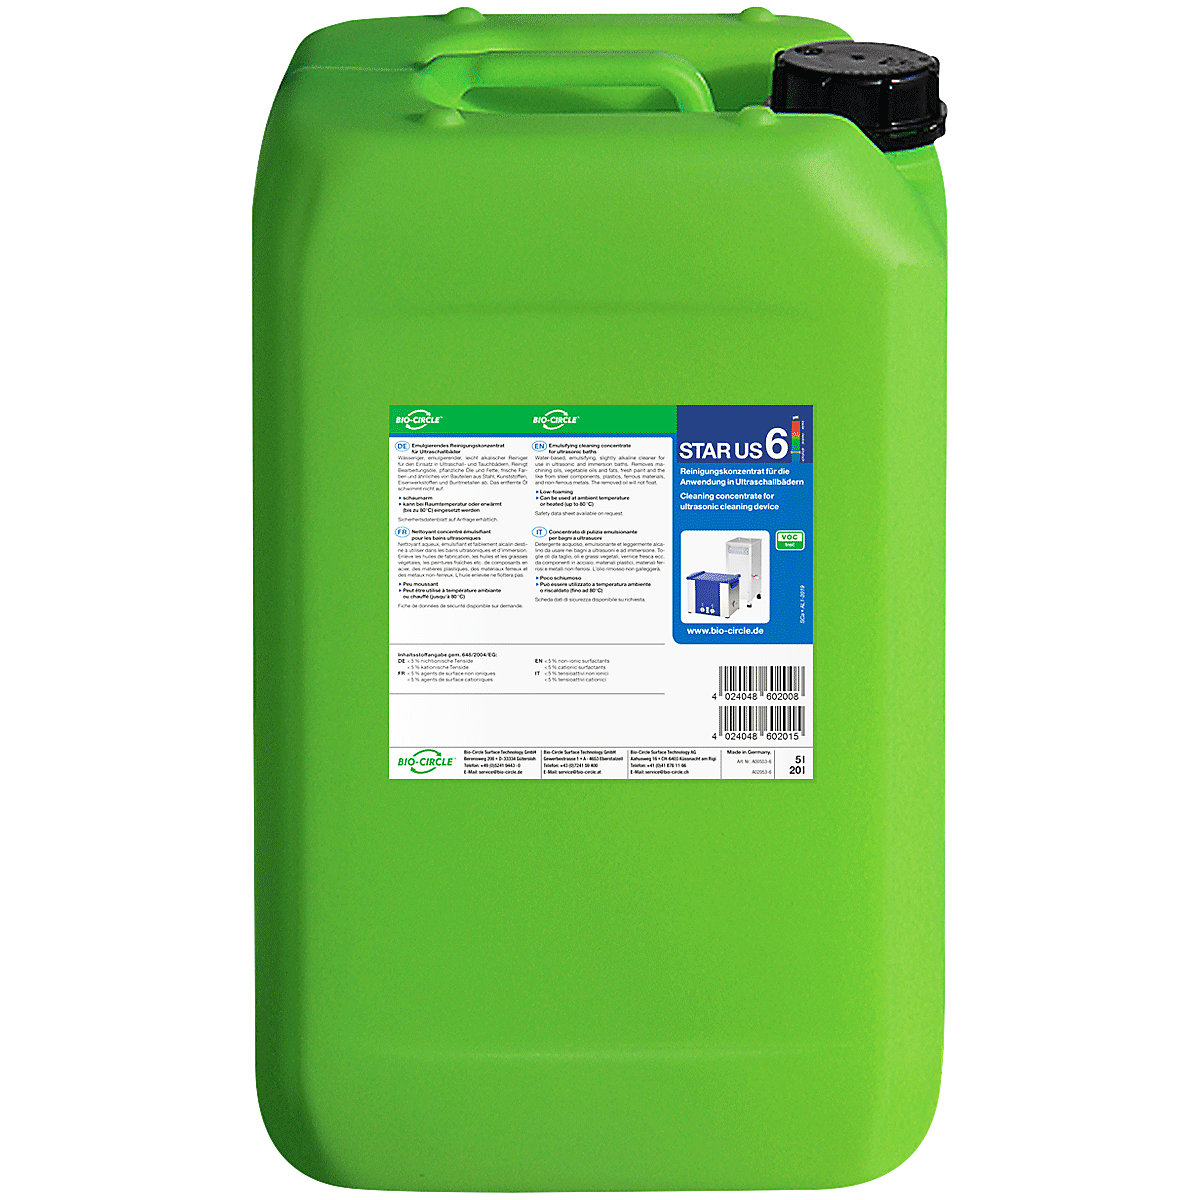 STAR US 6 ultrasonic cleaning agent – Bio-Circle, non-hazardous, capacity 20 l